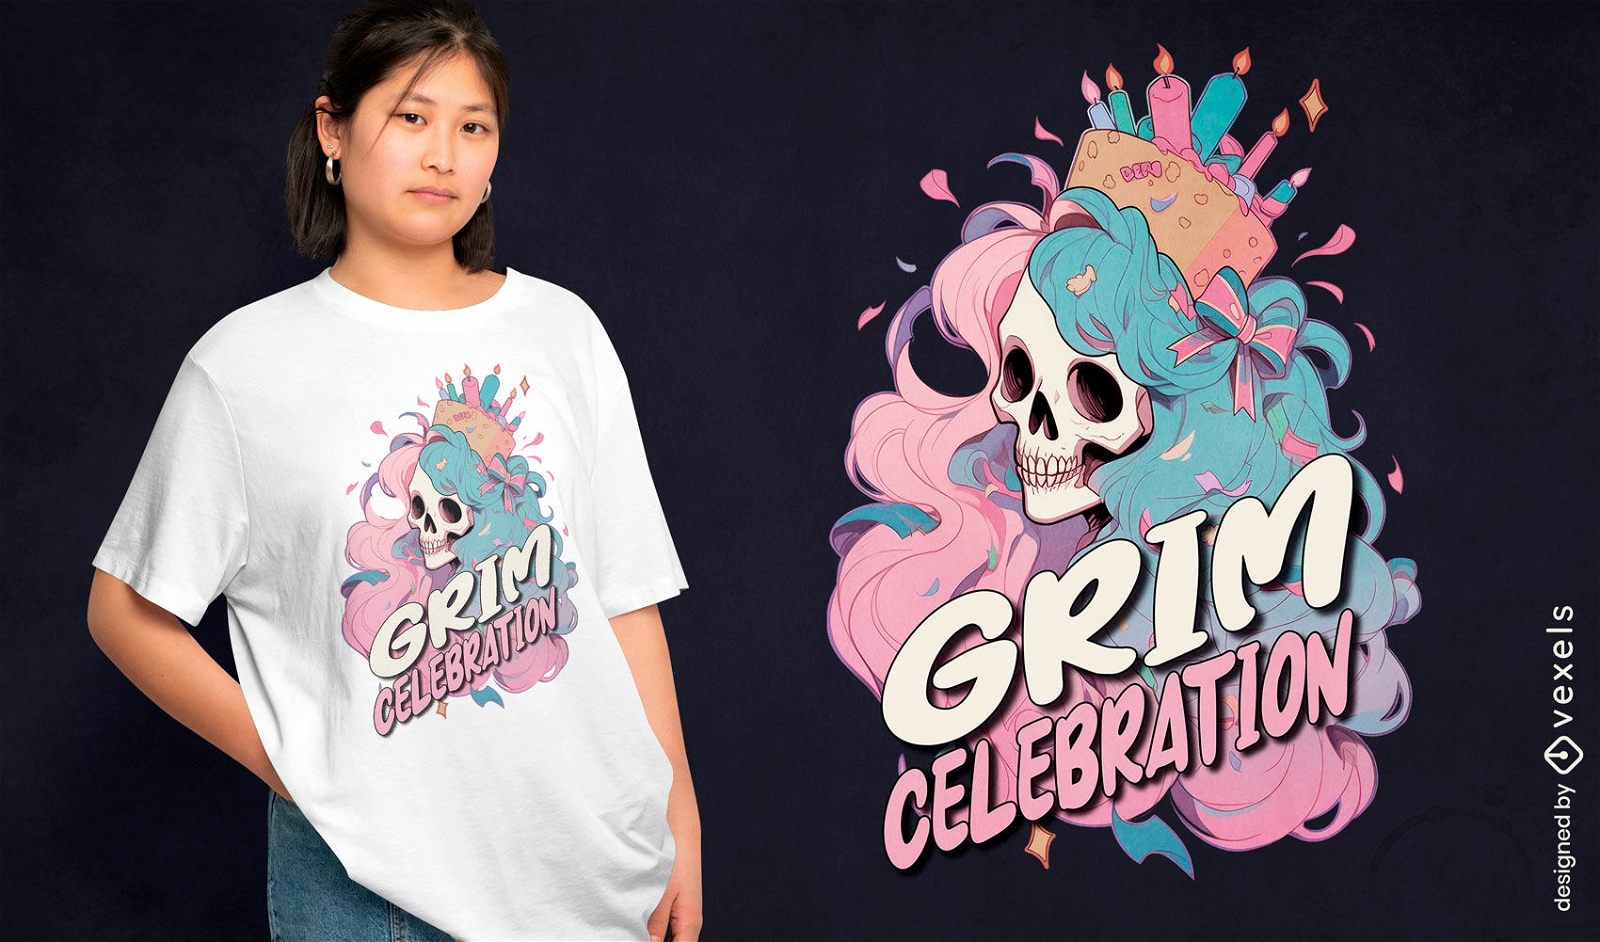 Süßes Skelett-Prinzessin-Geburtstags-T-Shirt PSD